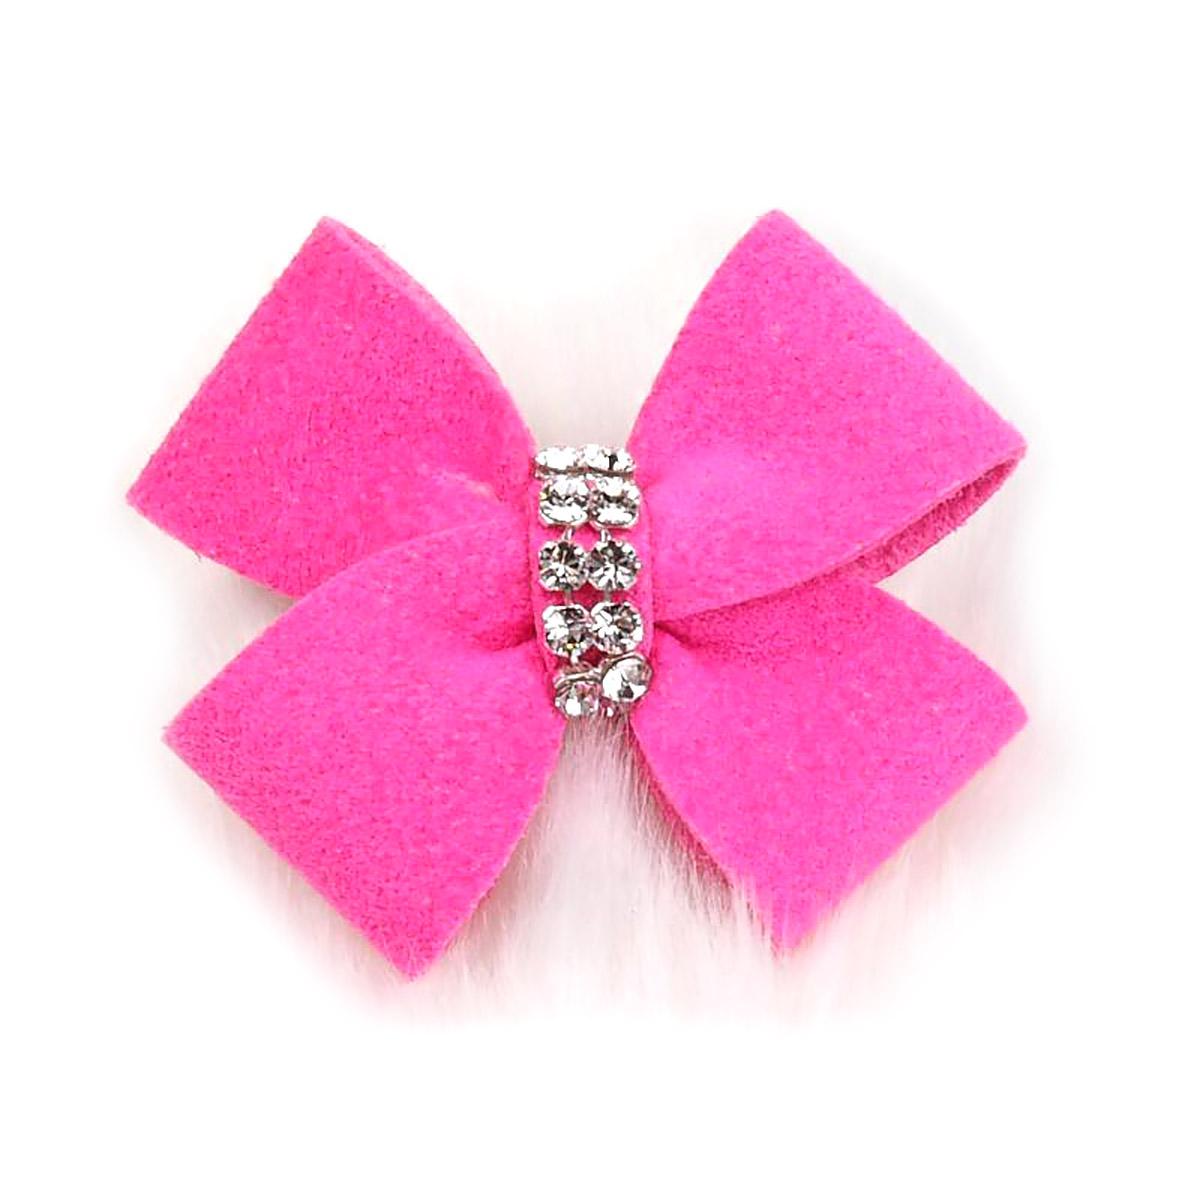 Nouveau Bow Dog Hair Bow by Susan Lanci - Sapphire Pink